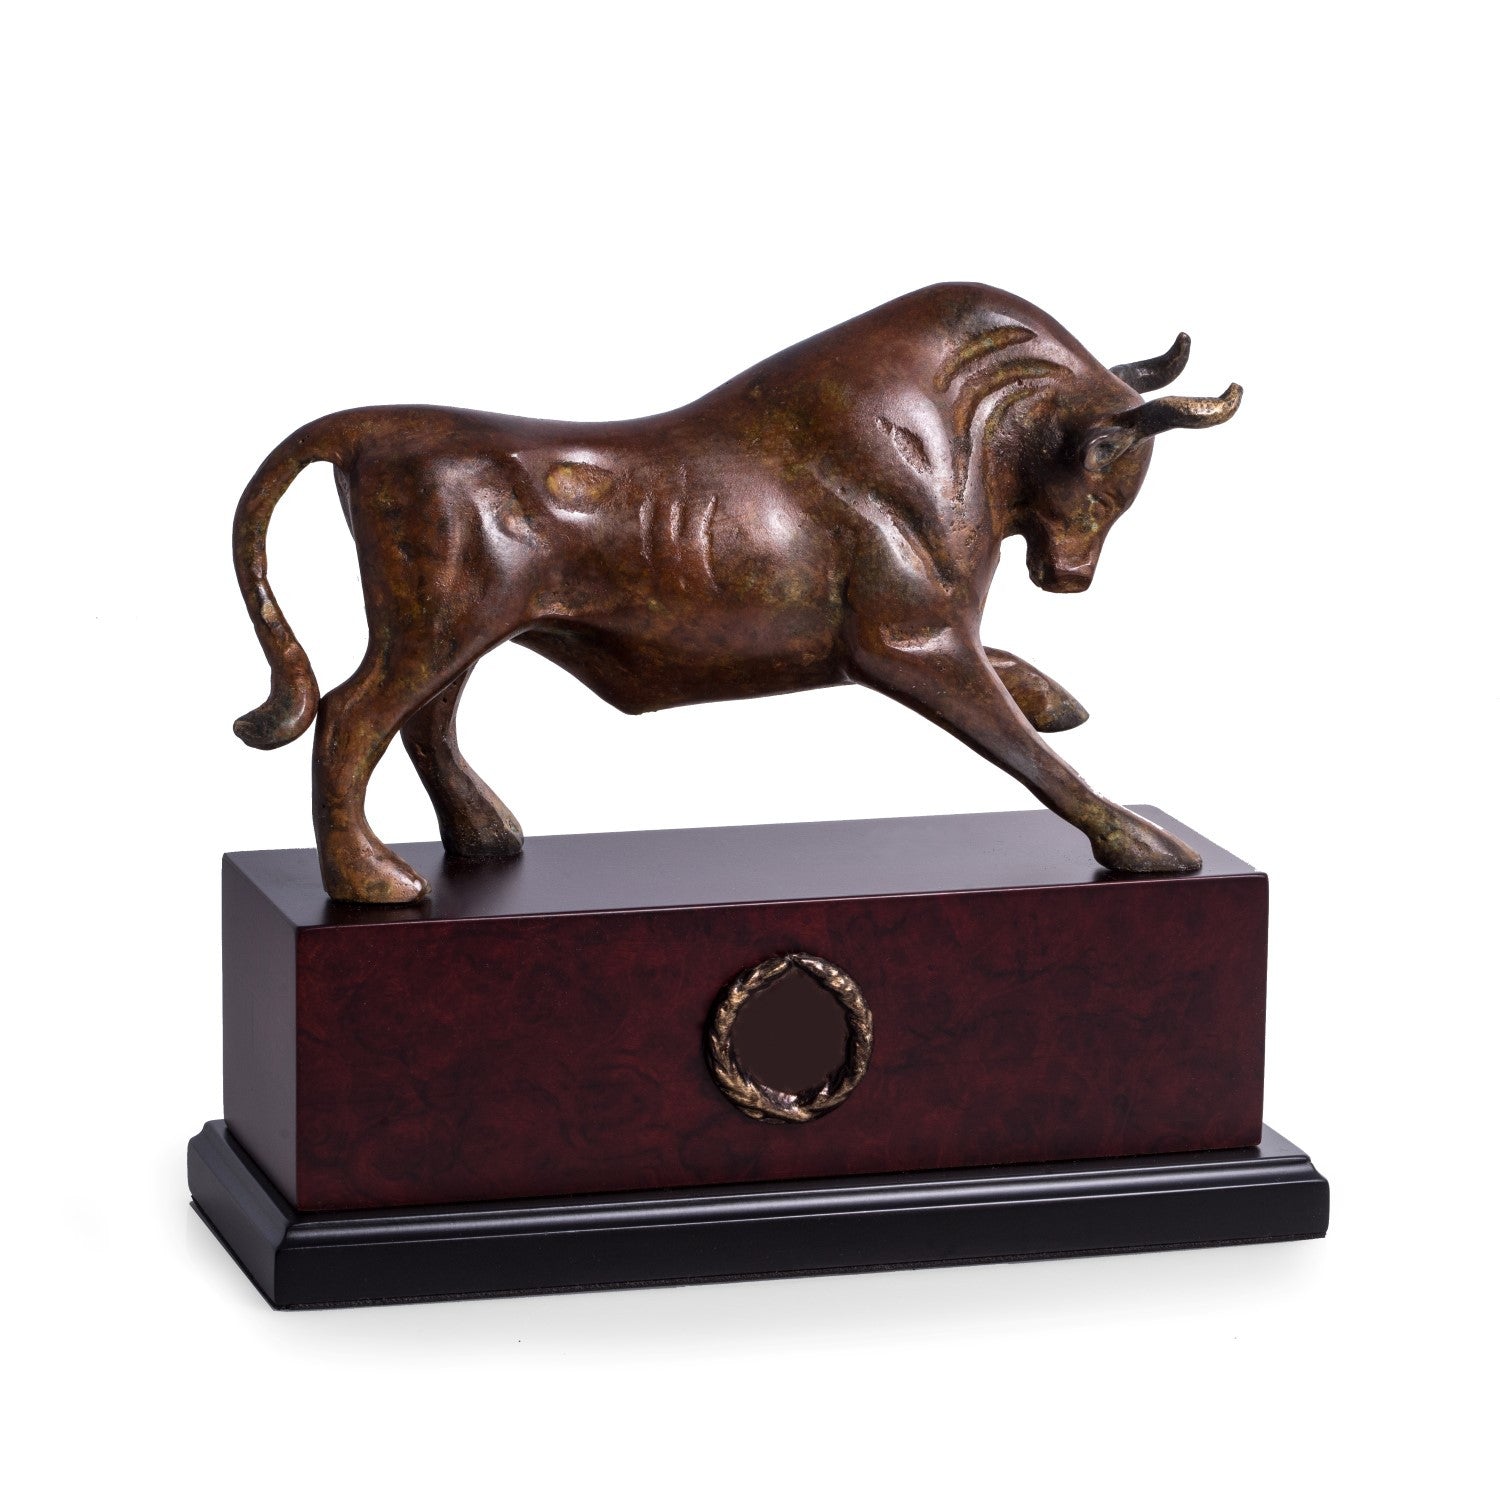 Wall Street Bull with Flamed Patina - Wall Street Treasures